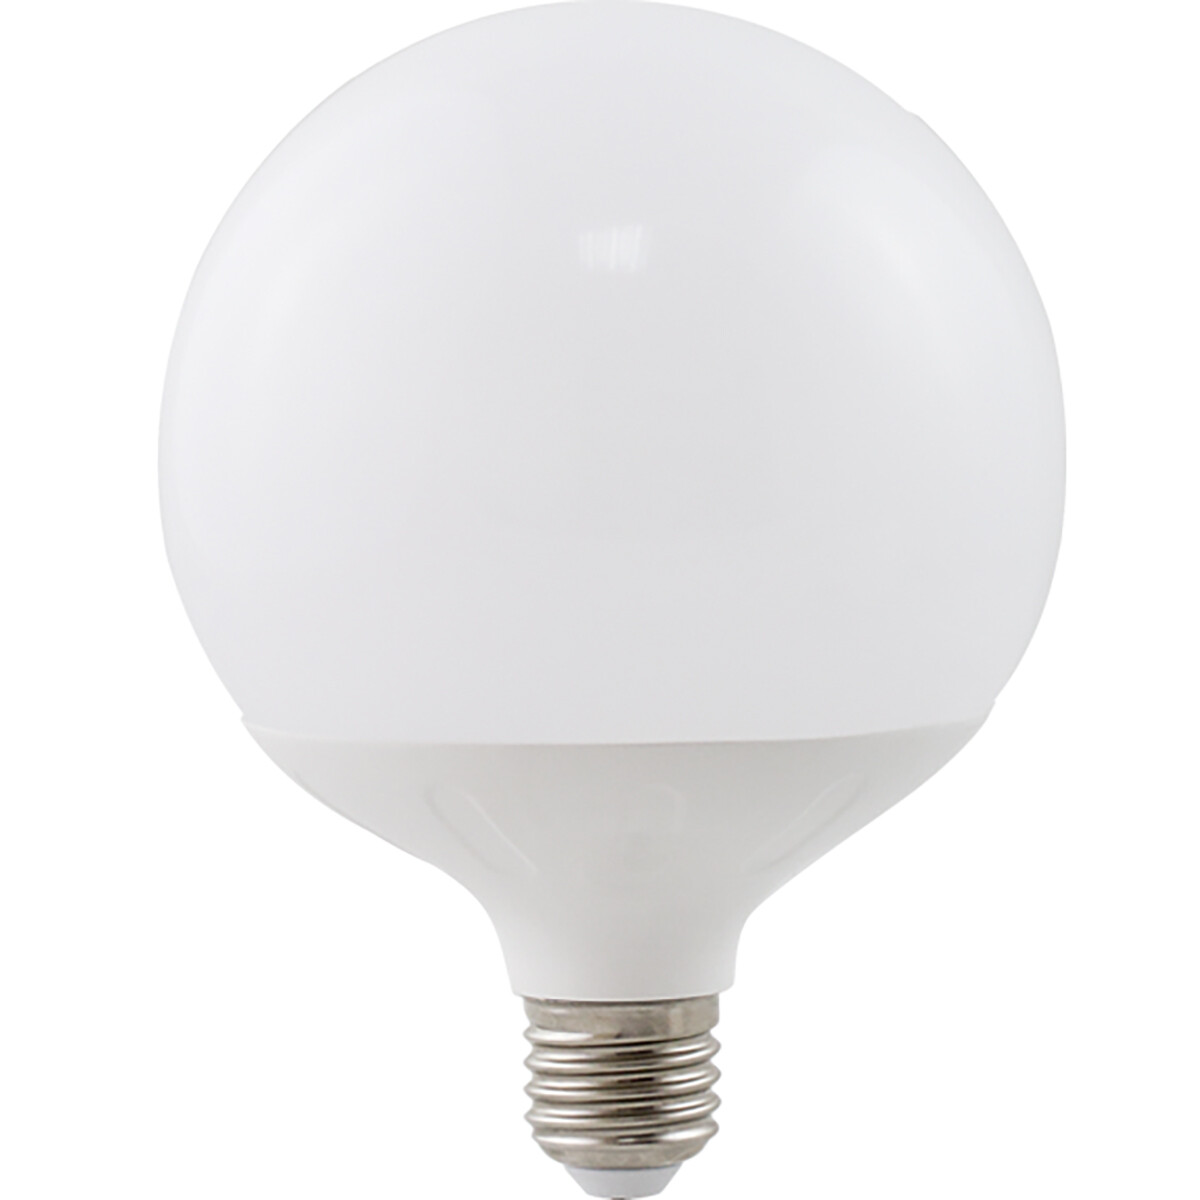 LED Lamp Aigi Lido Bulb G120 E27 Fitting 20W Helder-Koud Wit 6400K Wit